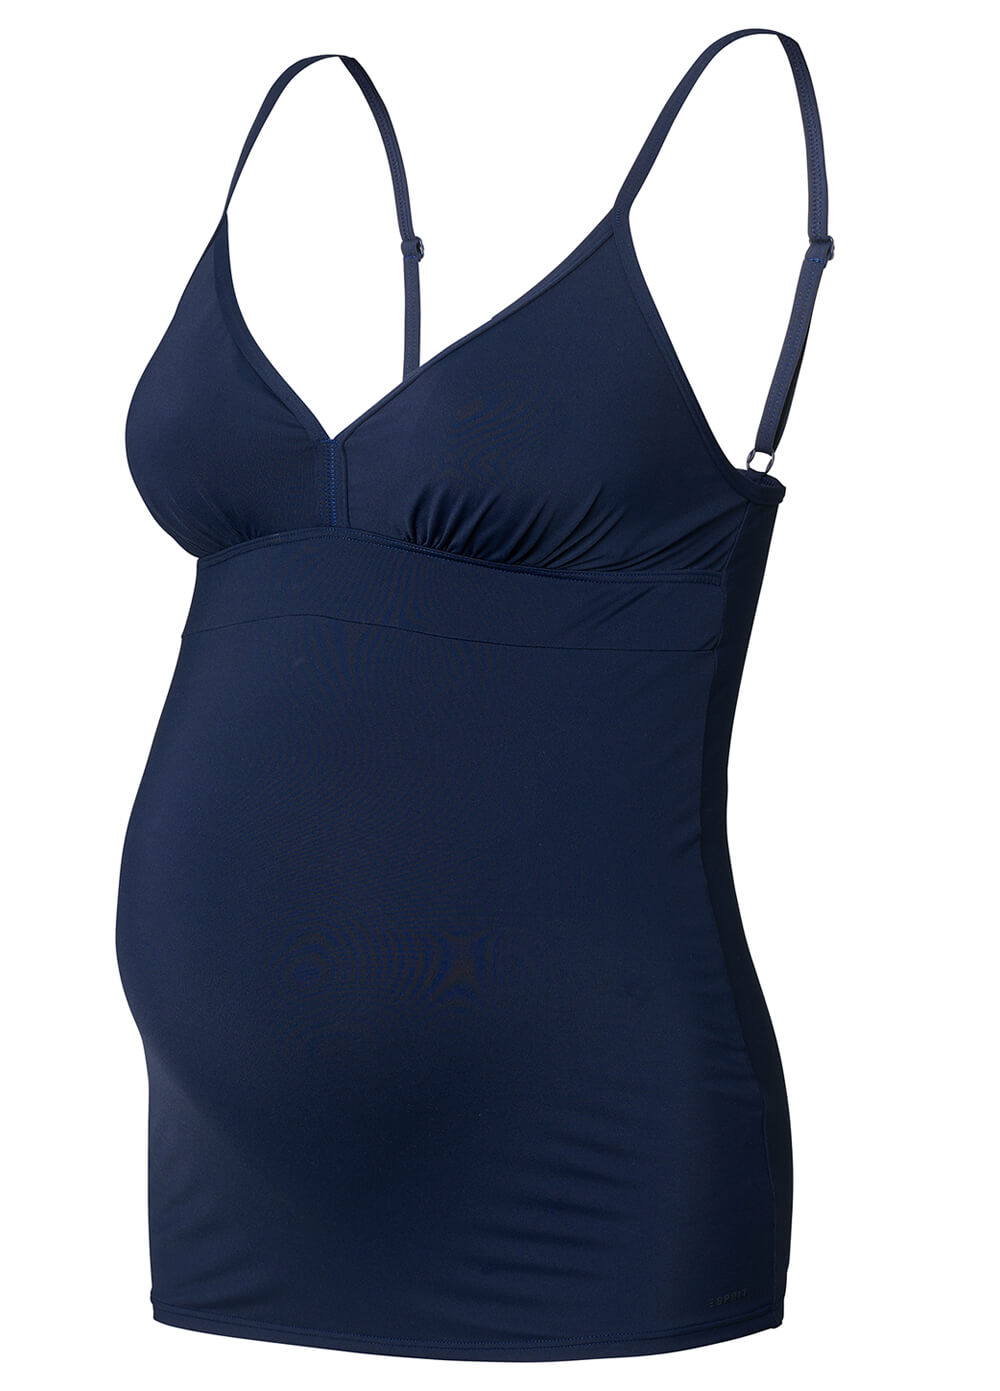 Koka Night Blue Maternity Swimwear Tankini Top by Esprit